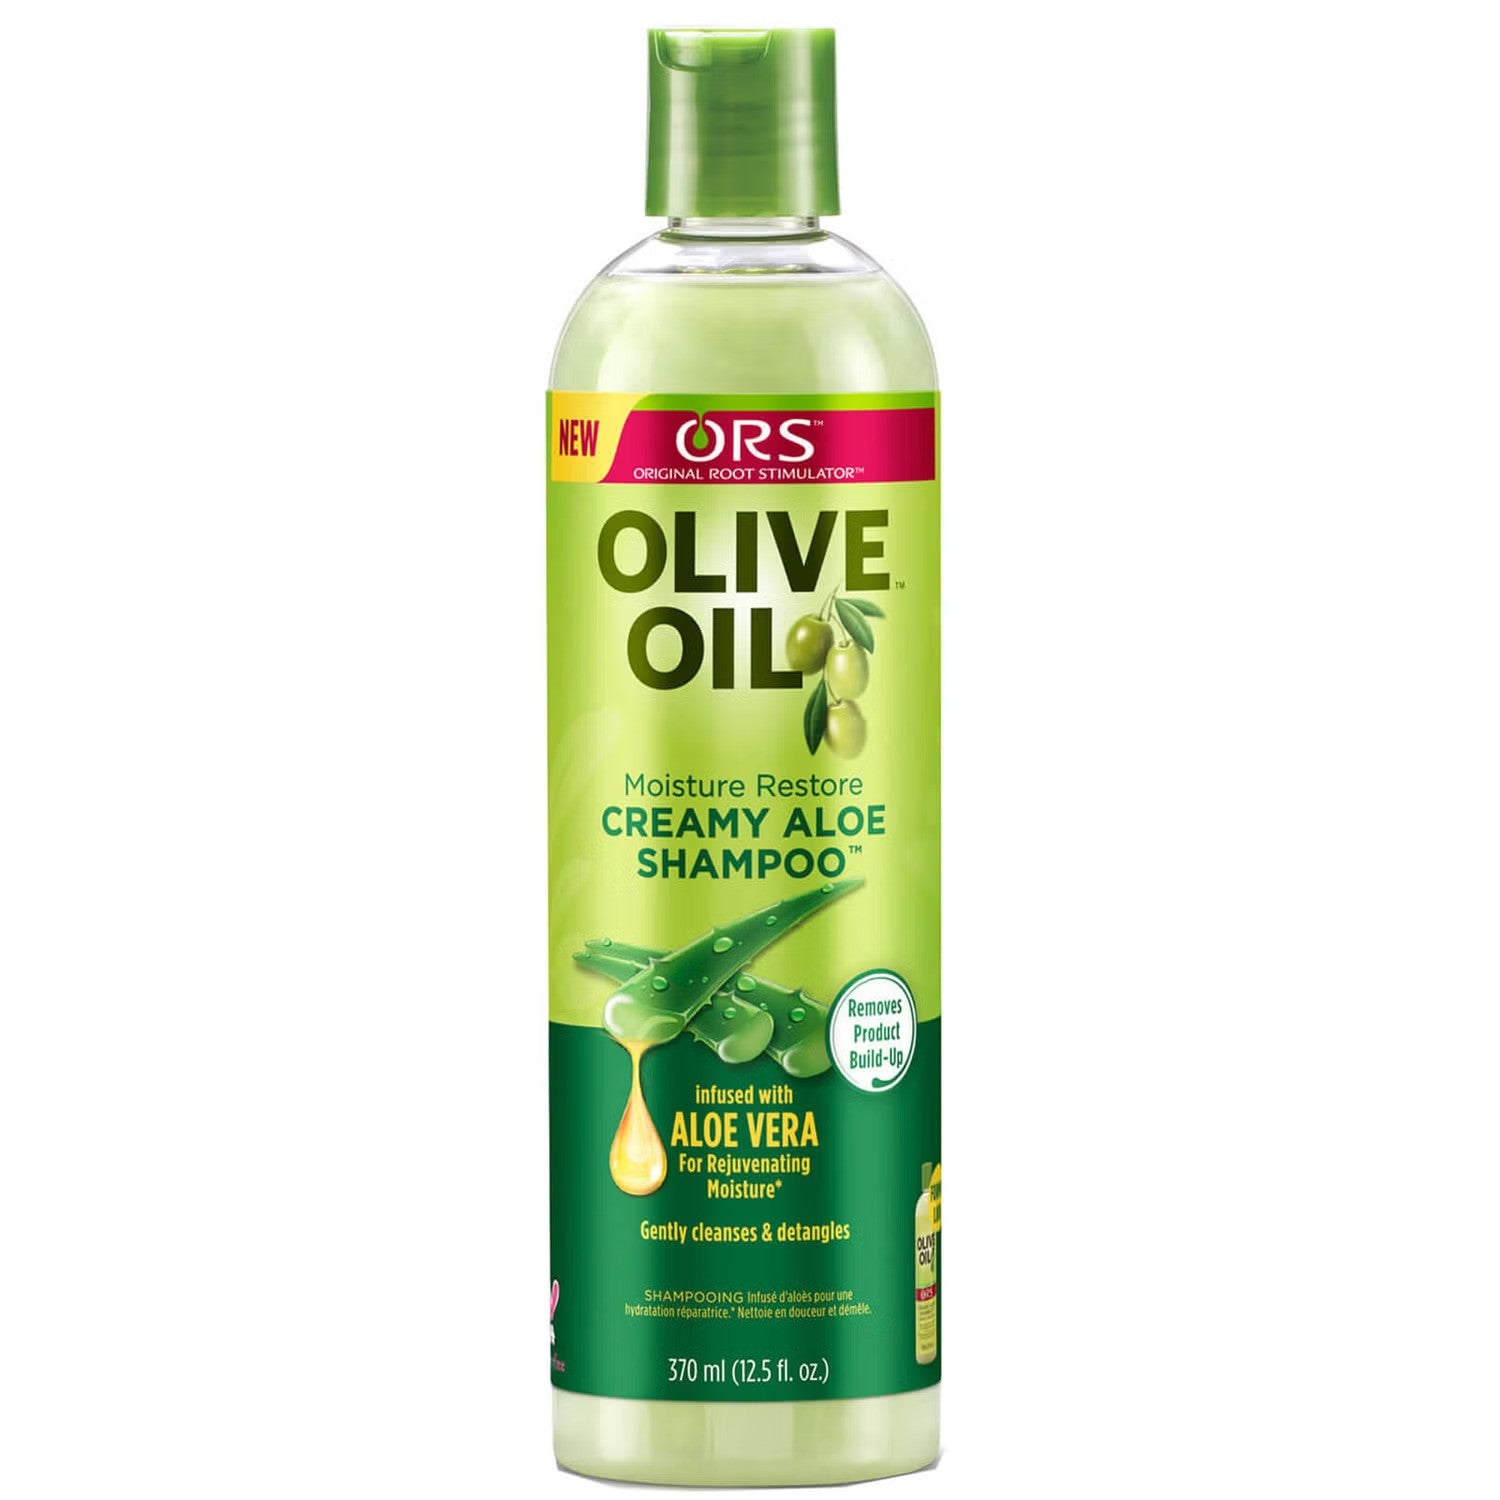 ORS Olive Oil Moisture Restore Creamy Aloe Shampoo 370ml / 51.7ml